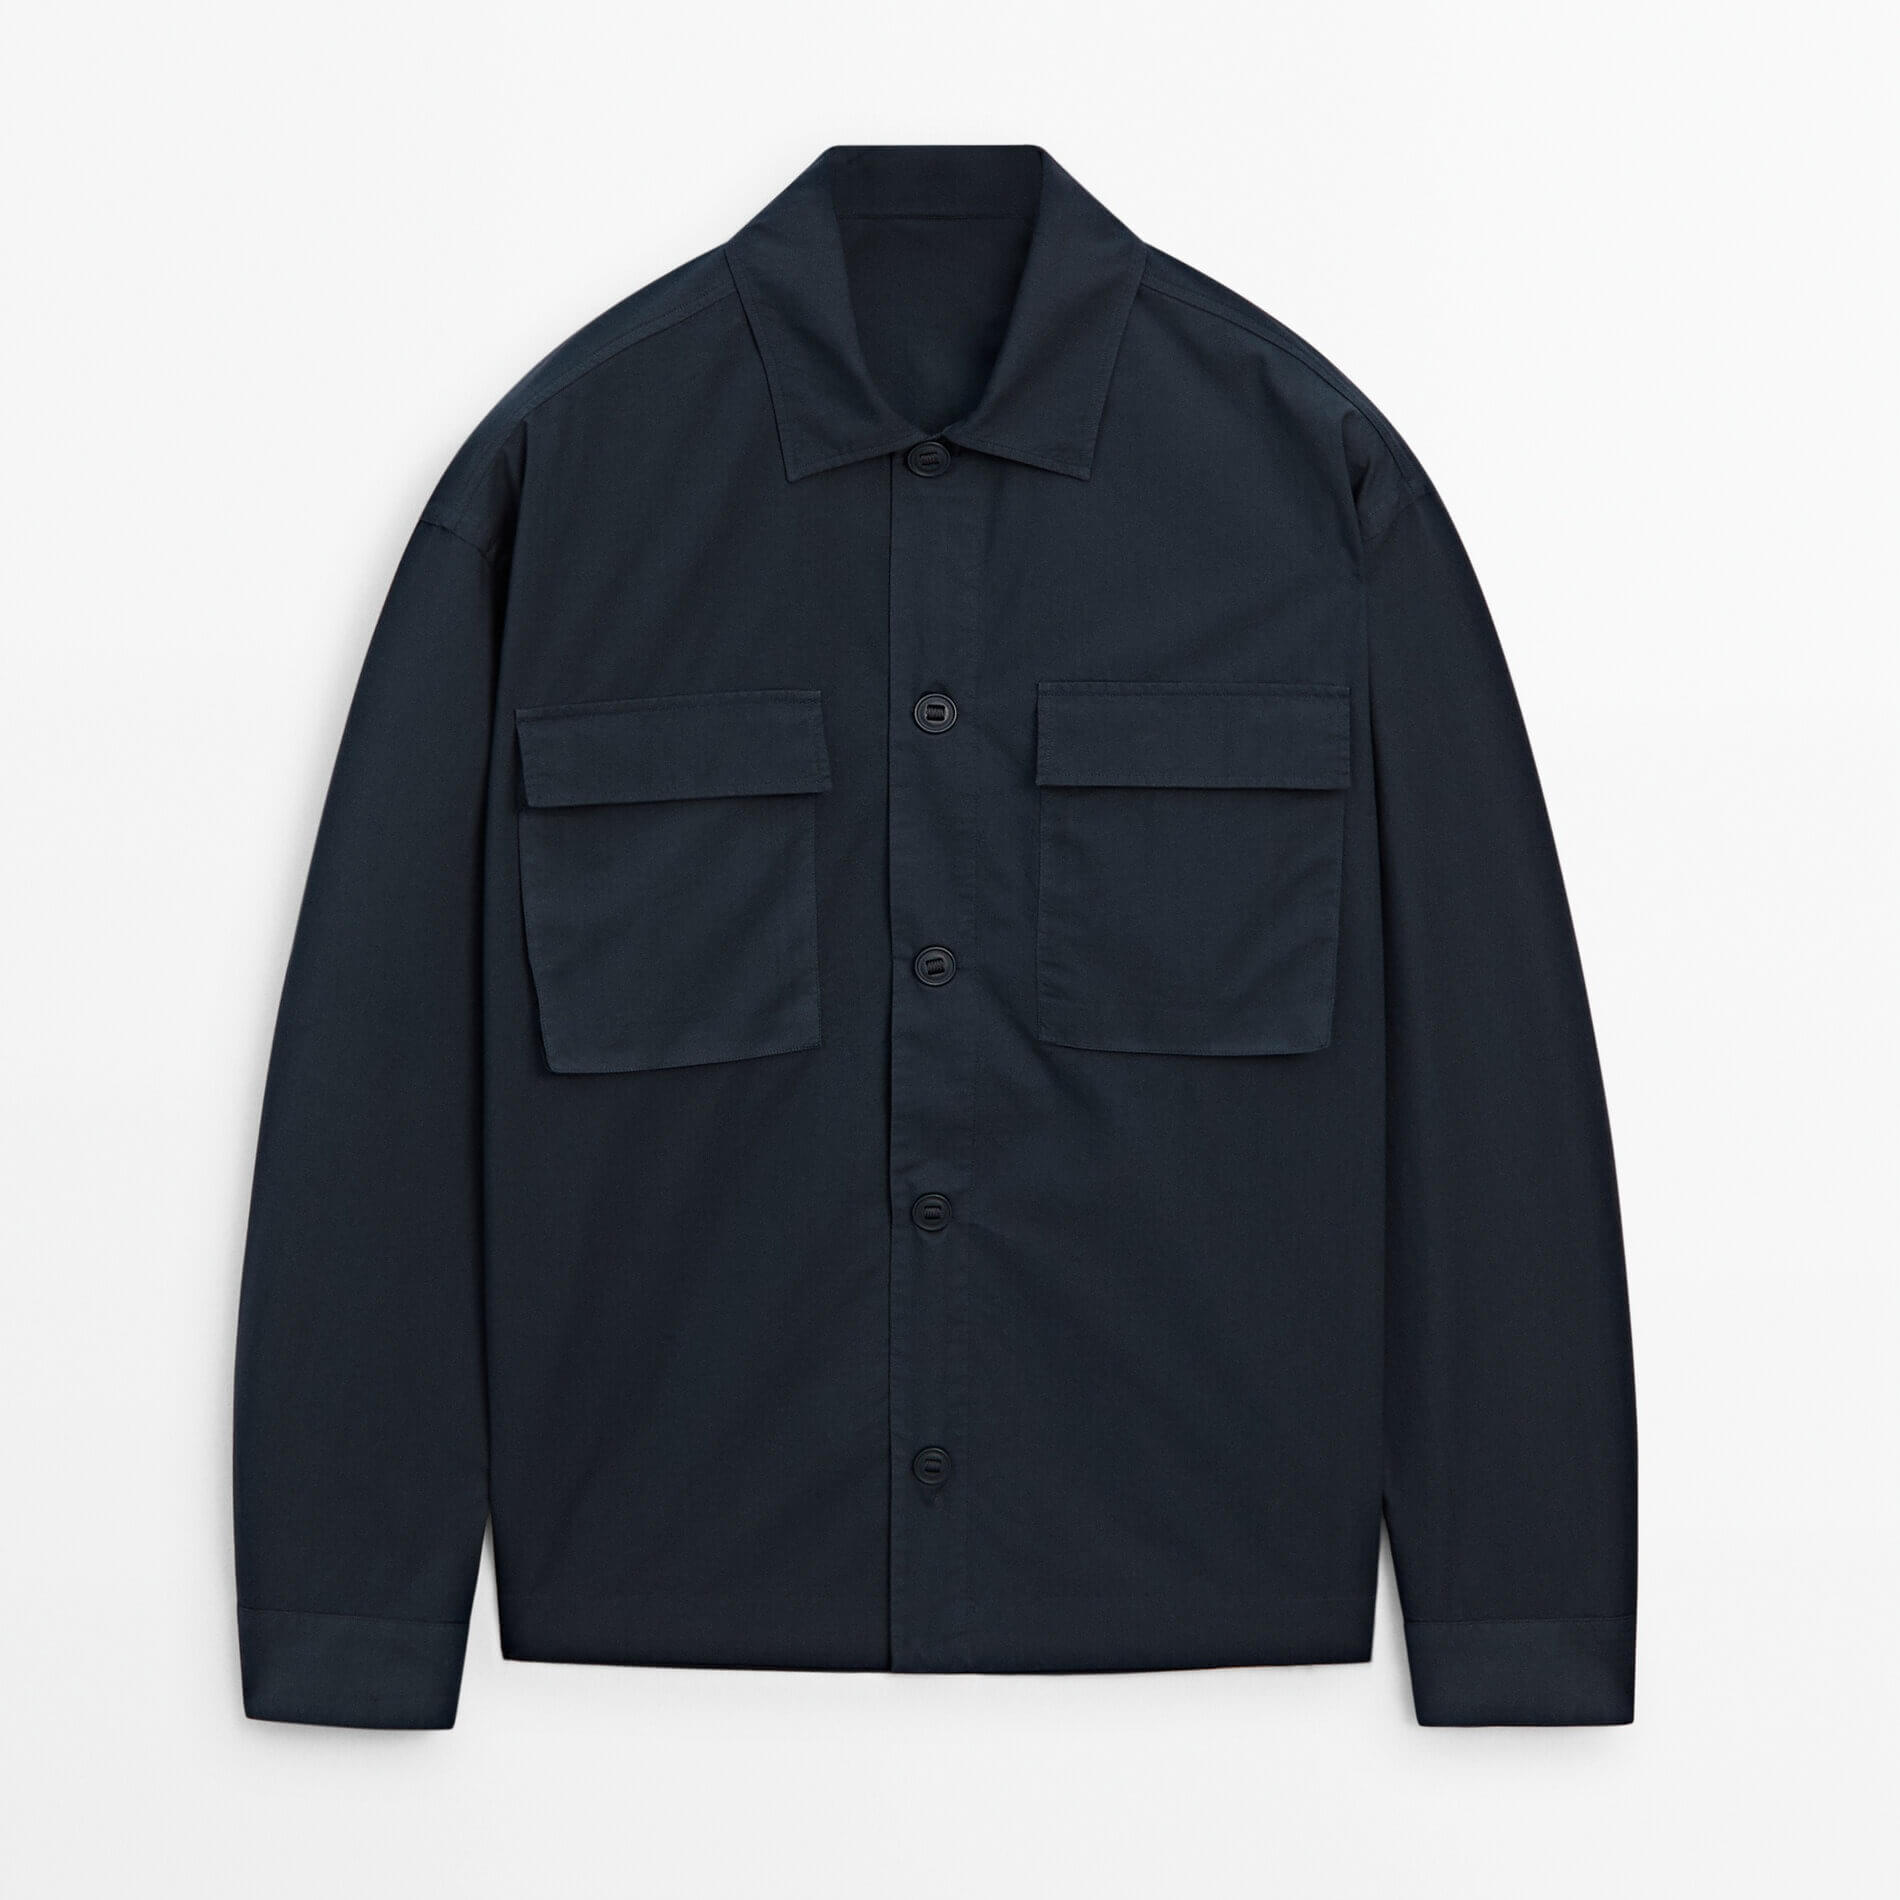 Куртка-рубашка Massimo Dutti Cotton With Chest Pockets, темно-синий куртка рубашка massimo dutti 100% cotton with pockets темный хаки